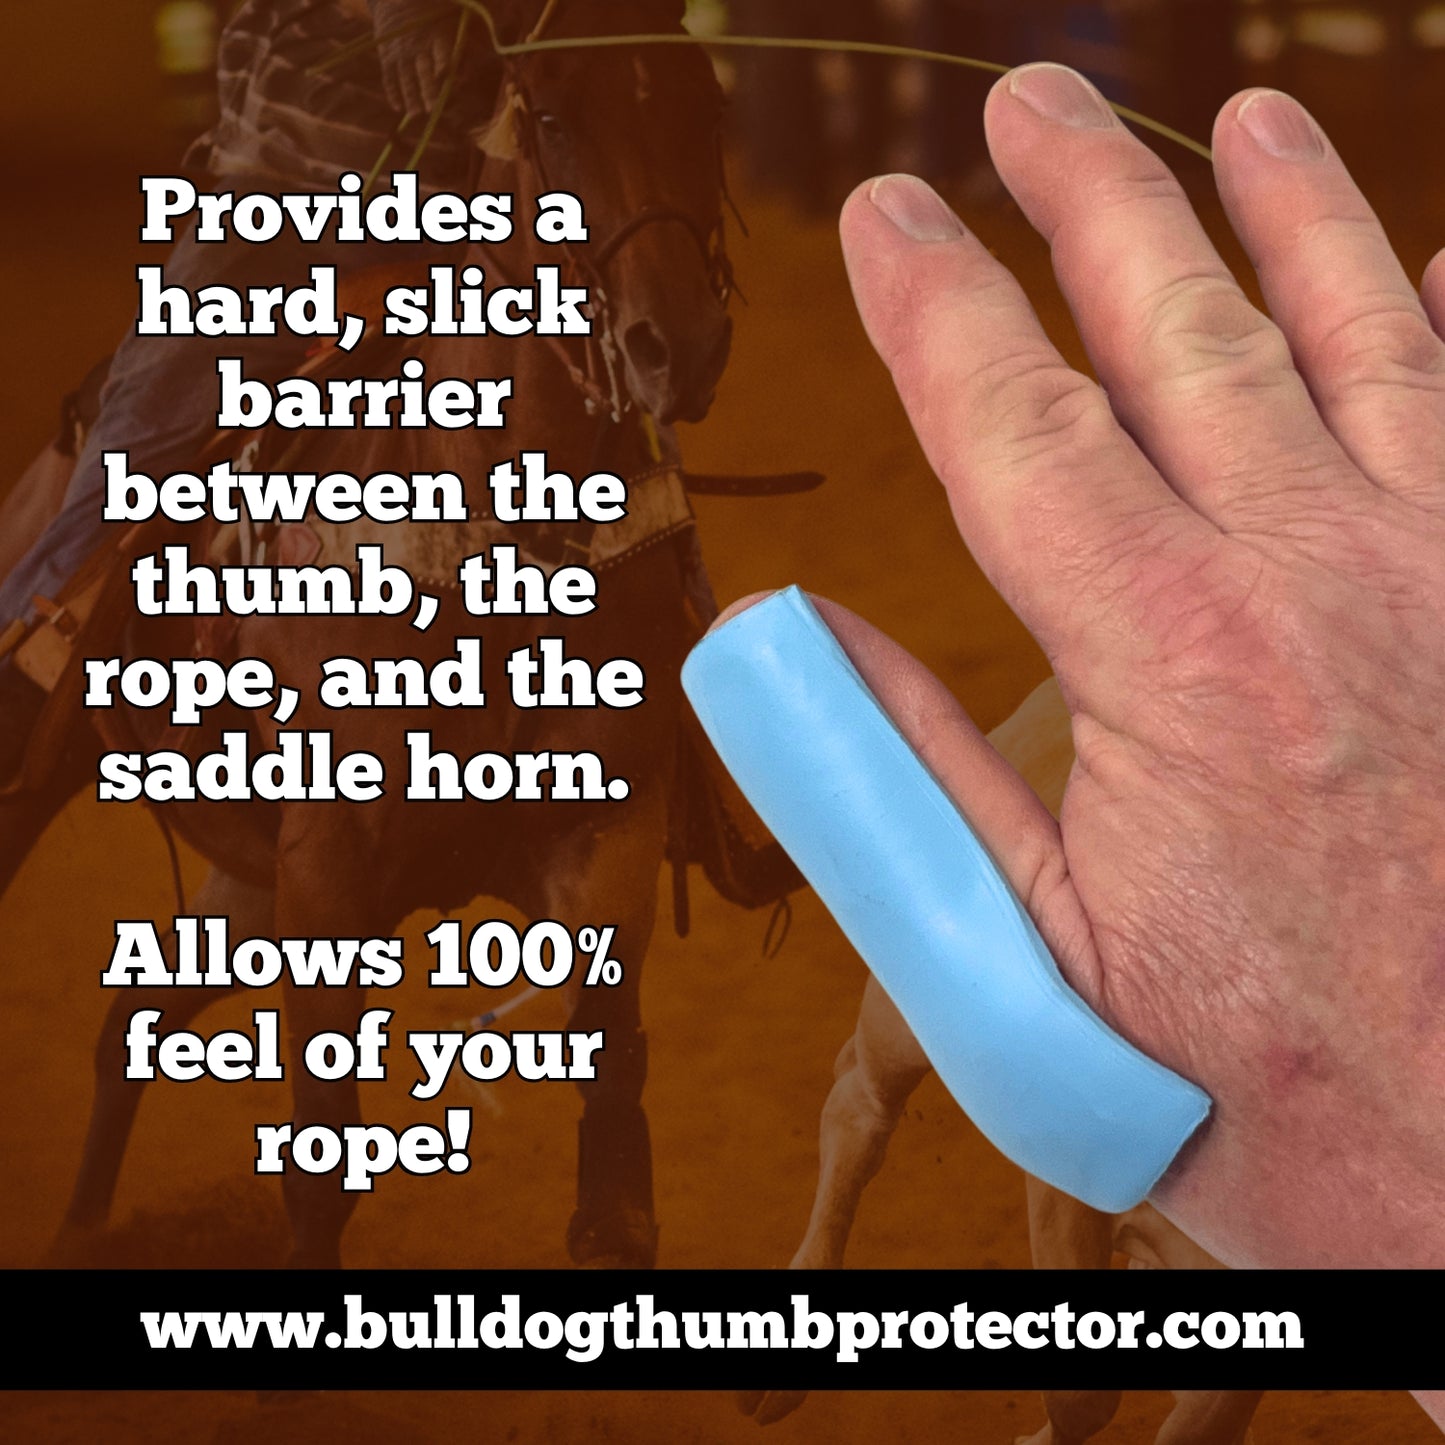 The Original Bulldog Thumb Protector